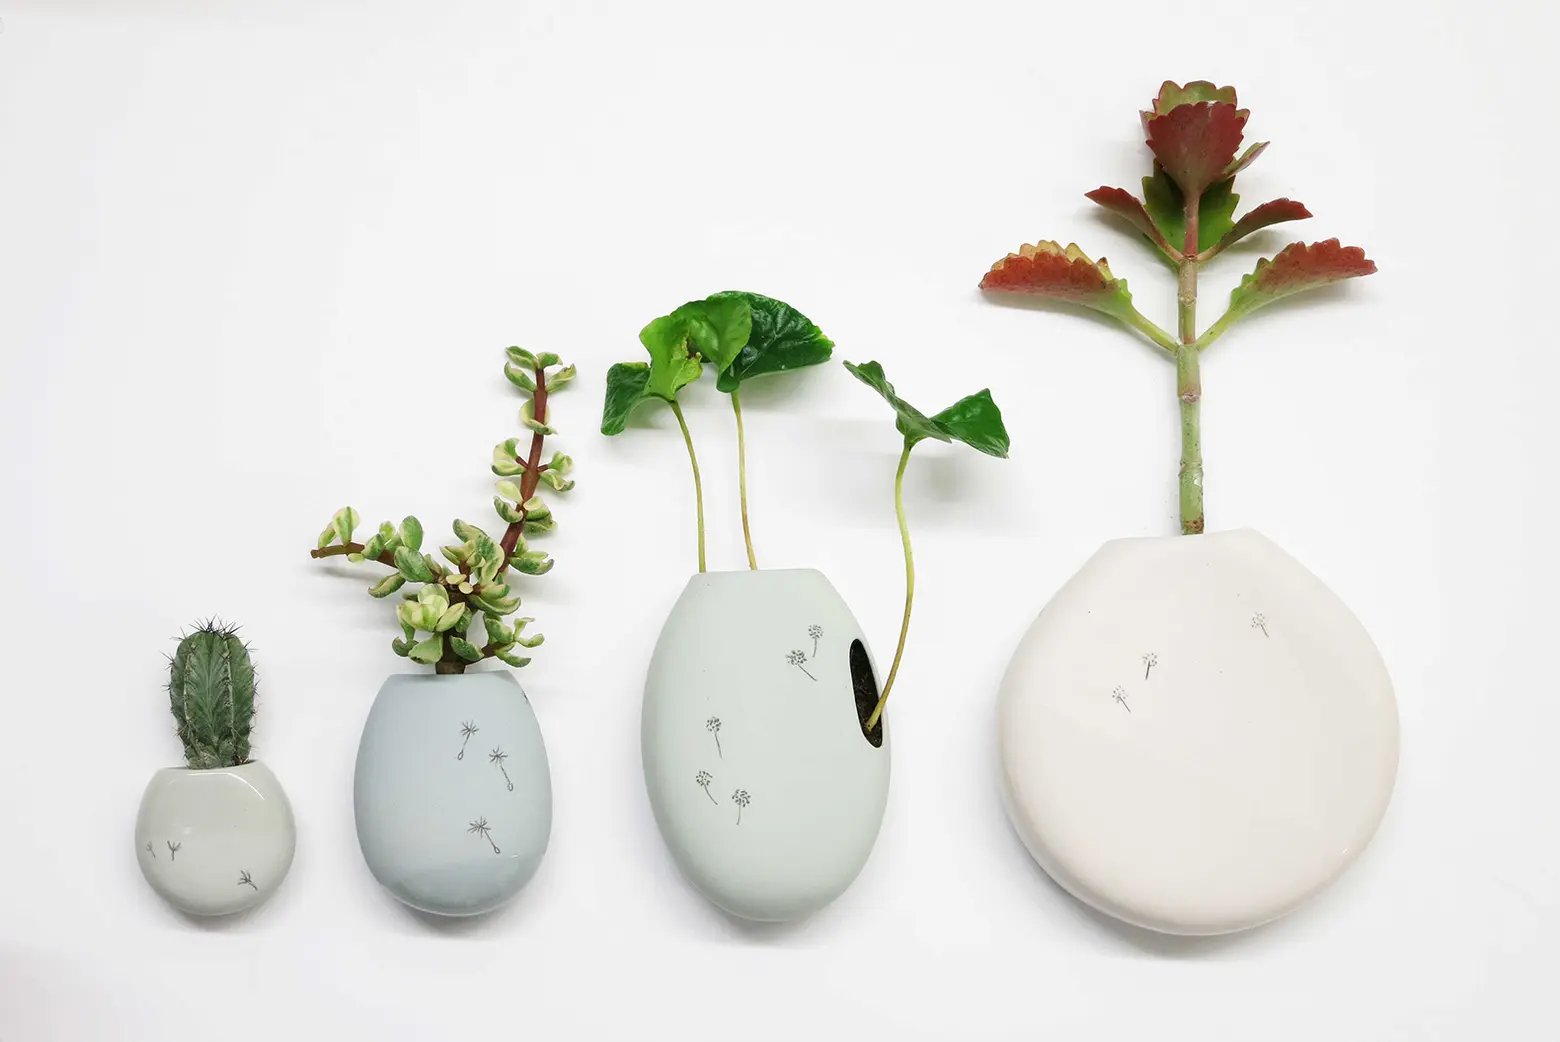 Ceramic ‘Wall Pockets’ Turn Plain White Walls Into Green Vertical Gardens